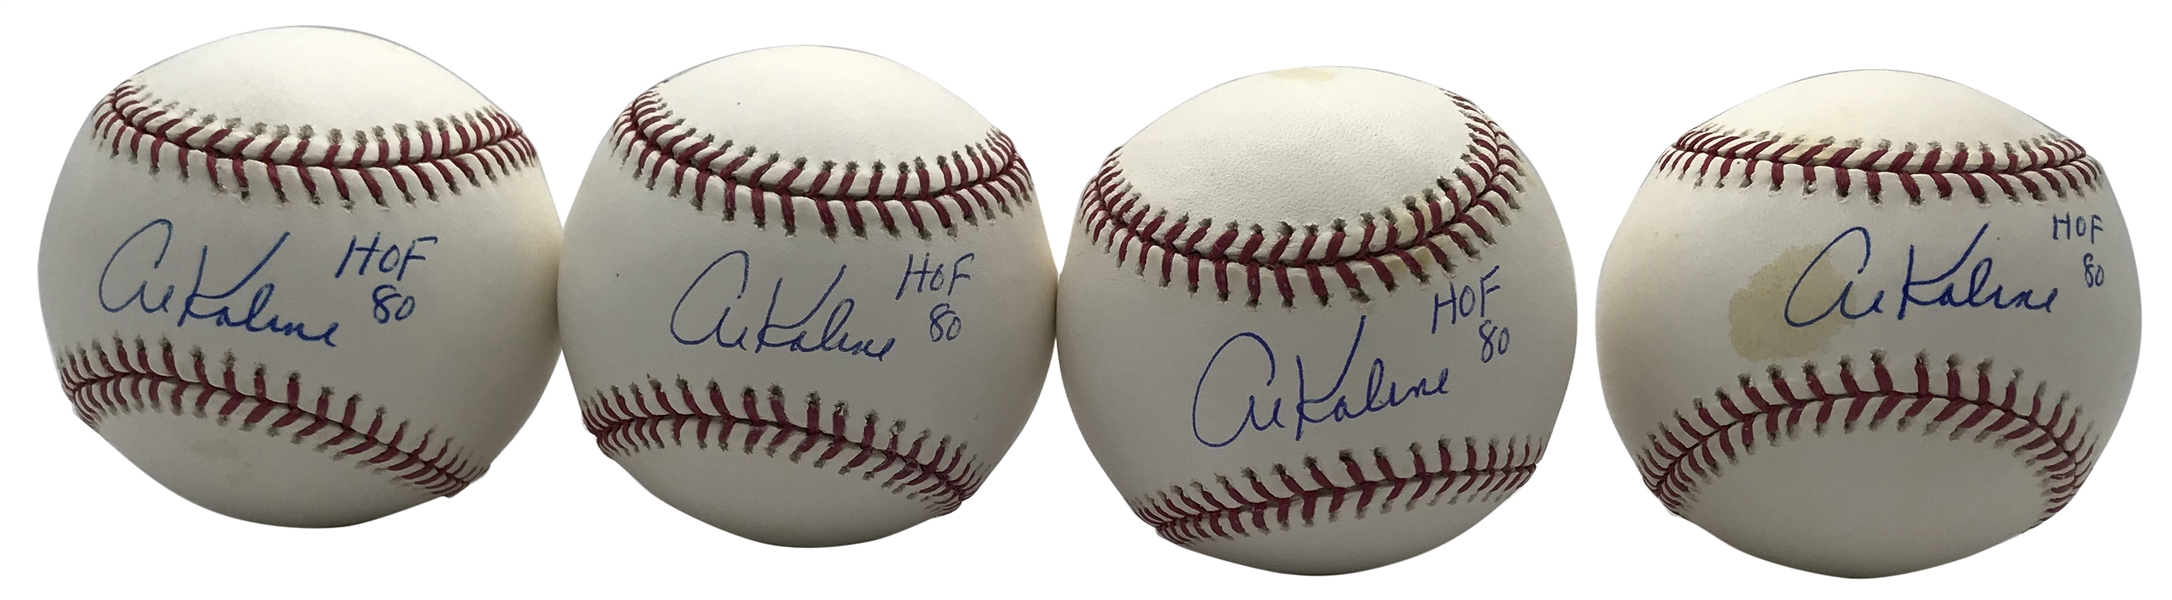 Al Kaline Lot of Four (4) Signed & Inscribed "HOF 80" OML Baseballs (Beckett/BAS Guaranteed)